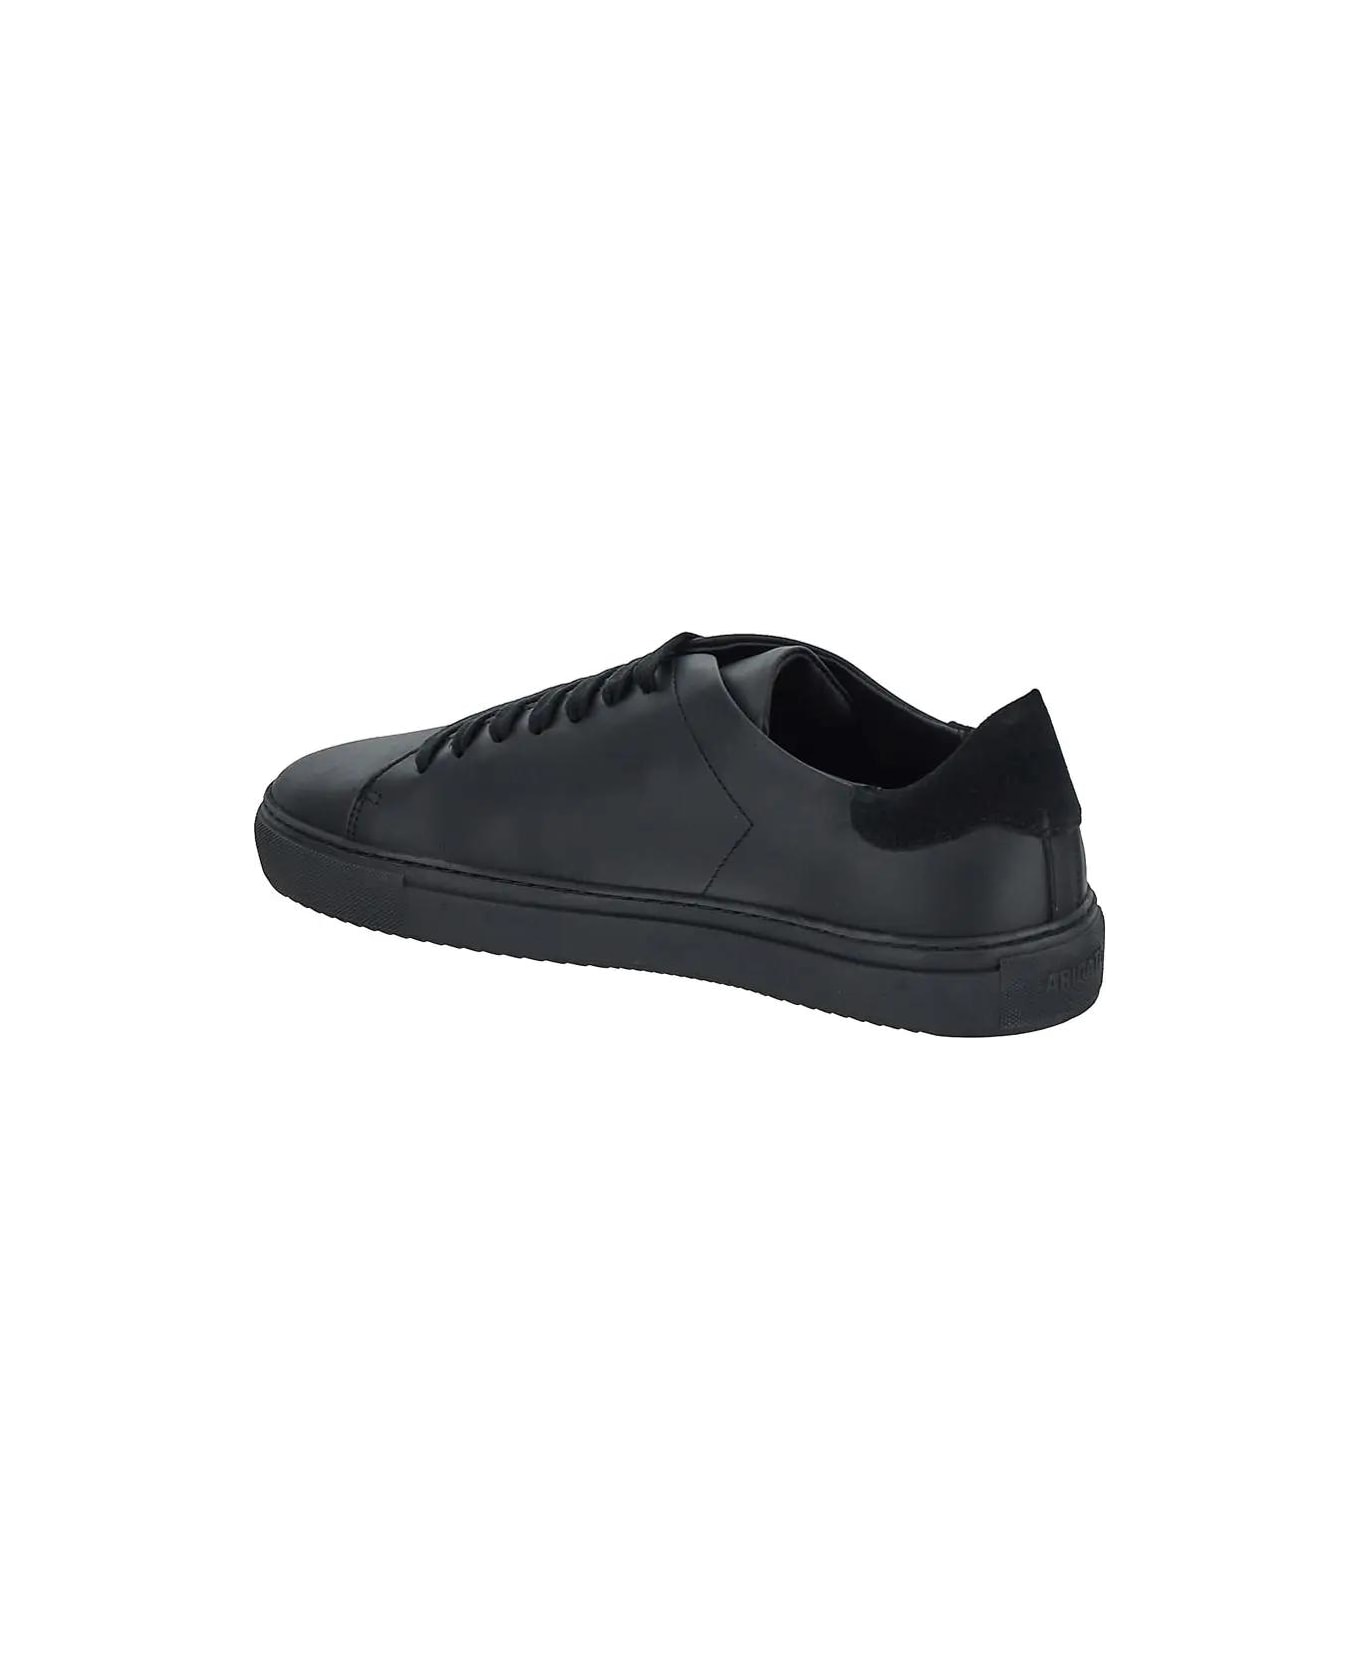 Axel Arigato Clean 90 Sneaker - Black